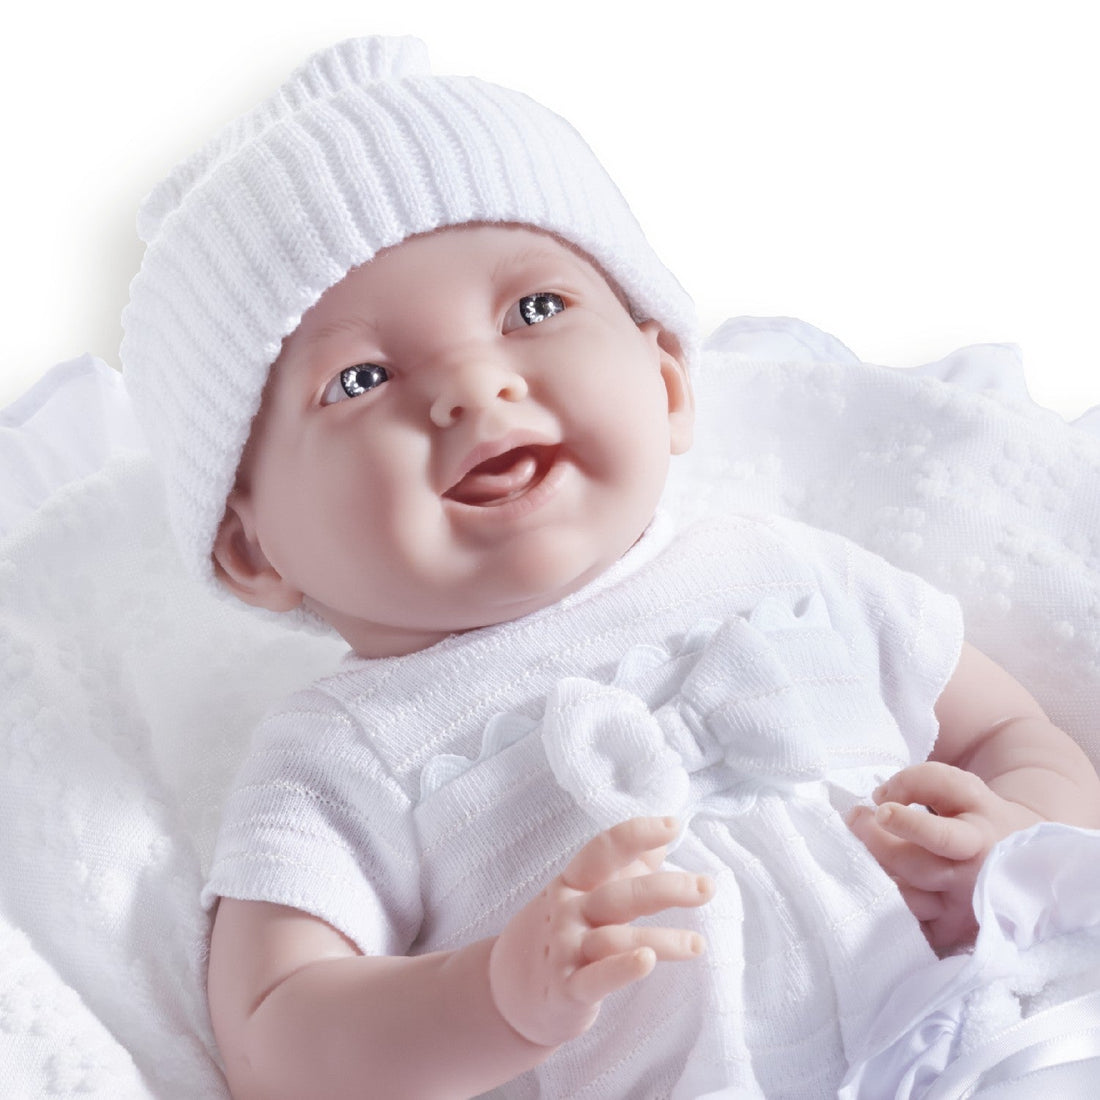 Soft Body La Newborn in White Bunting and Accessories - Dolls and Accessories